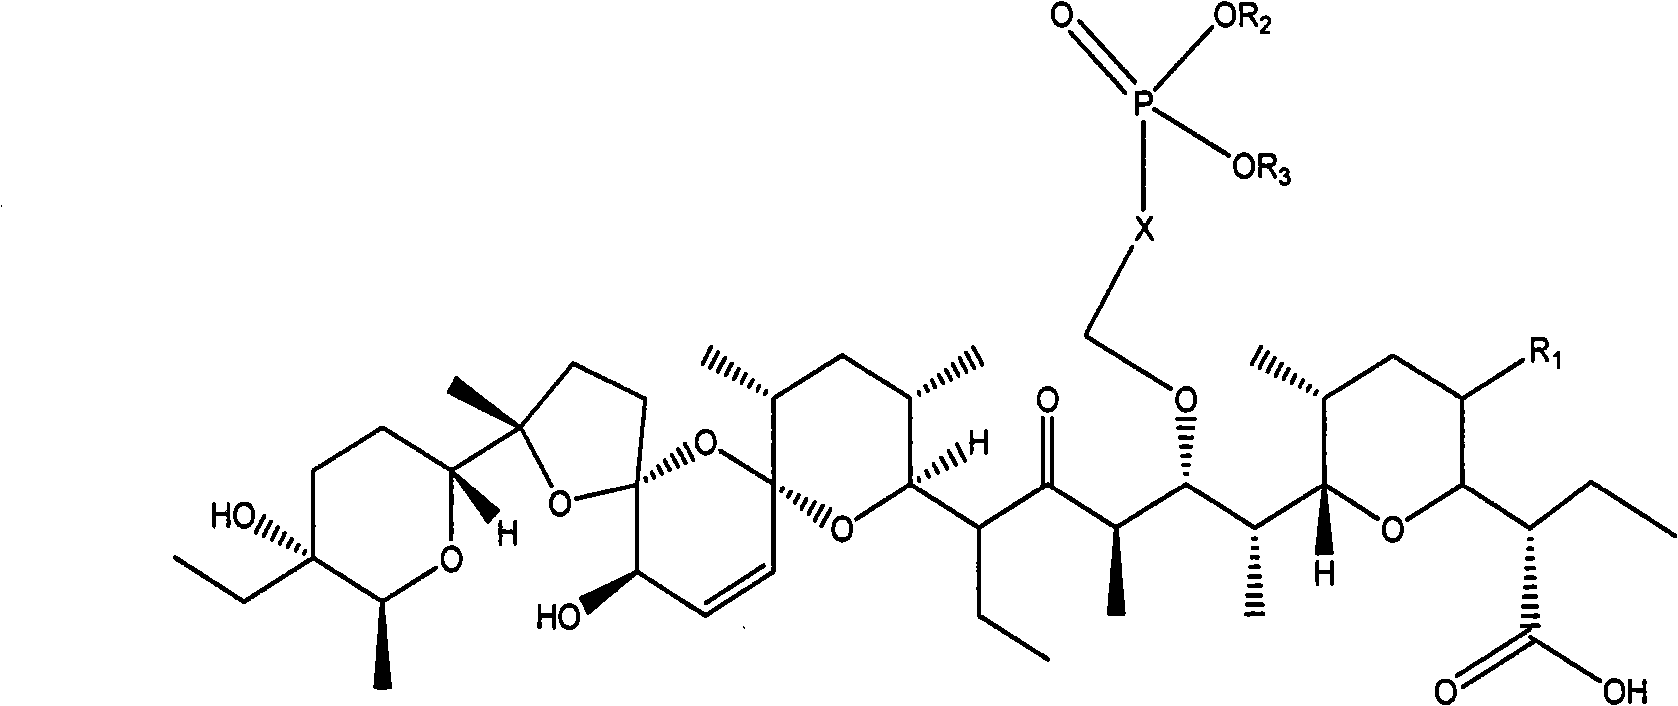 Phosphoryl methyl salinomycin ether derivative and preparation method thereof